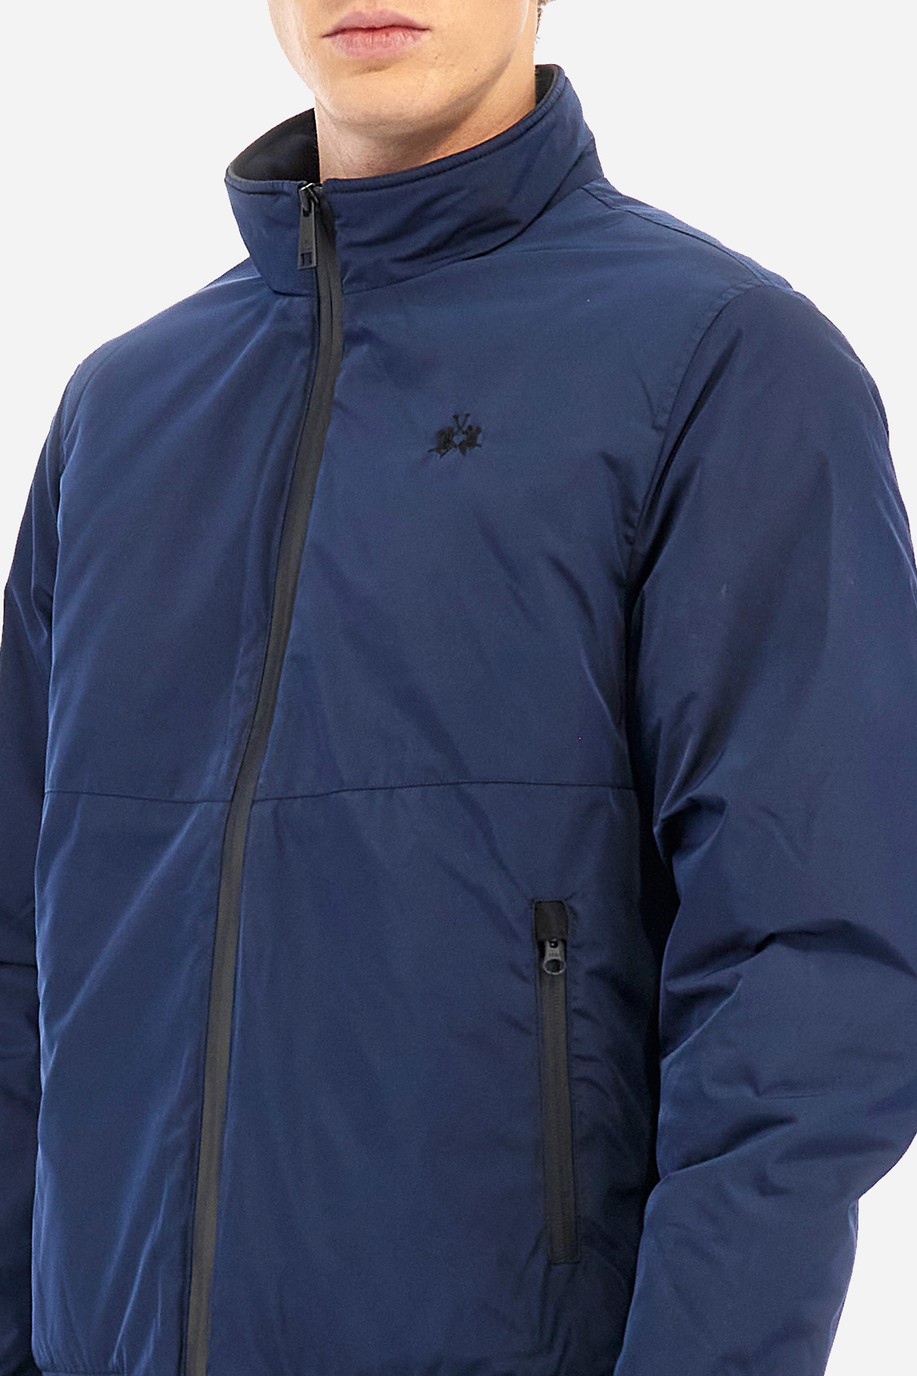 Man outdoorwear in regular fit - Wladyslav - Rainproof & Windproof | La Martina - Official Online Shop